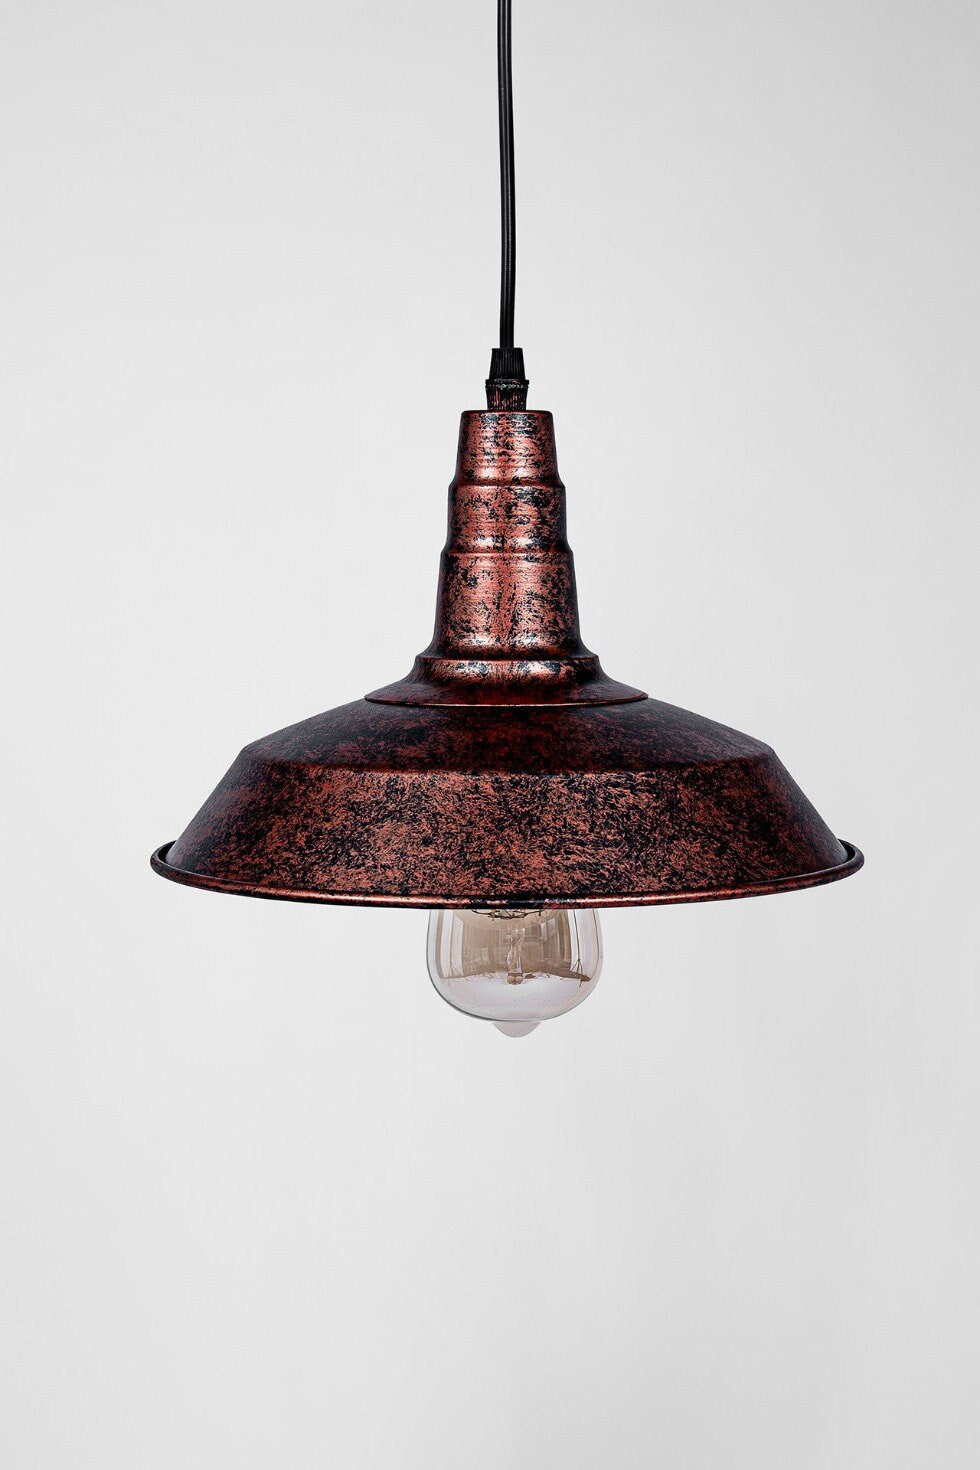 Mitchell - Retro Vintage Industrial Design Metal Pendant Lamp